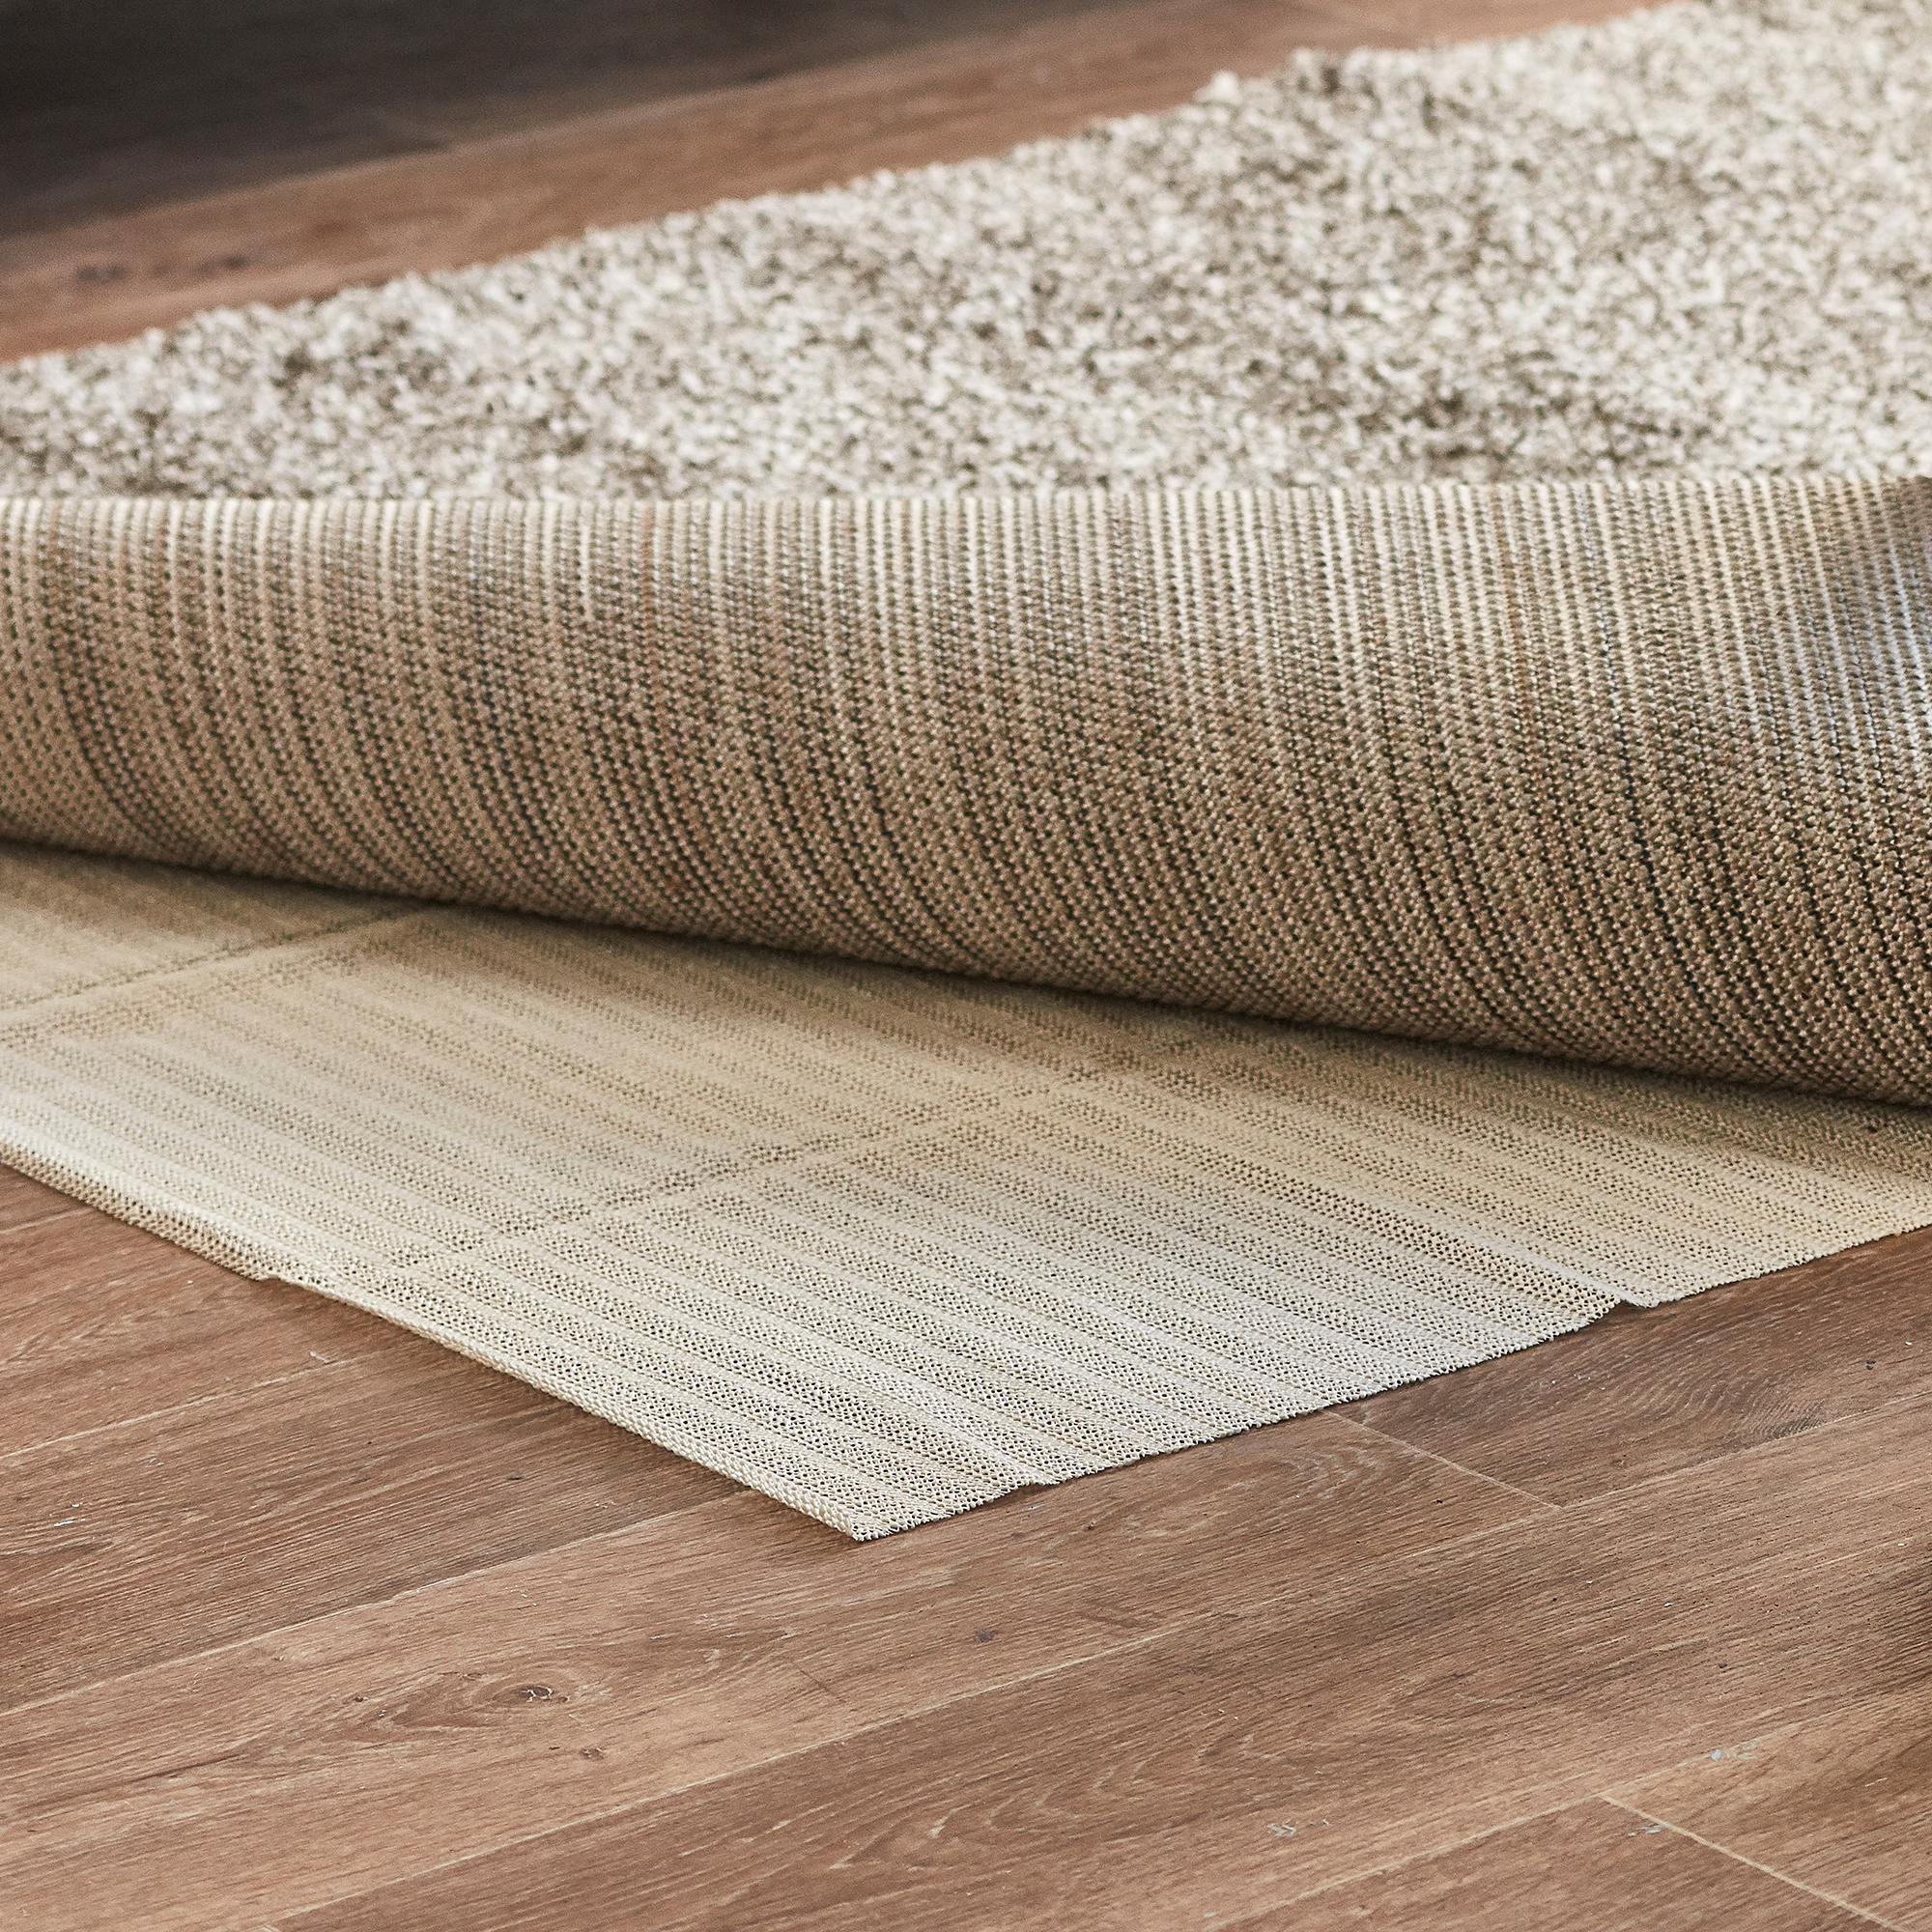 Network Rug Pad For Wooden Tiled, Rug Mats For Hardwood Floors